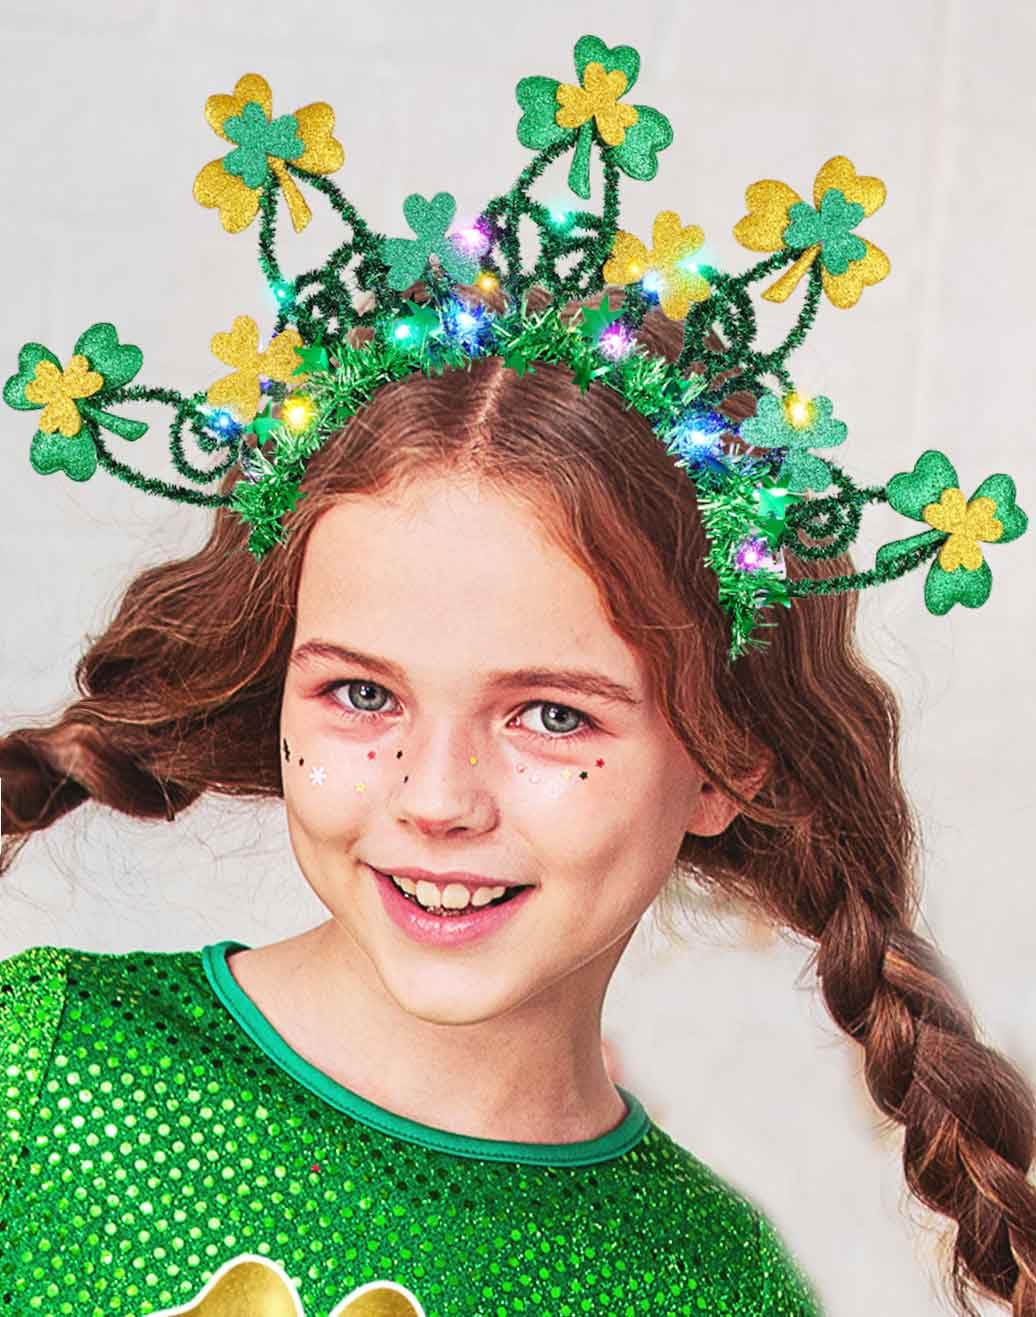 Catery Irish Shamrock Headband St Patricks Day Light up H eadband Green Shiny St Patrick's Day Hair Accessories for Women